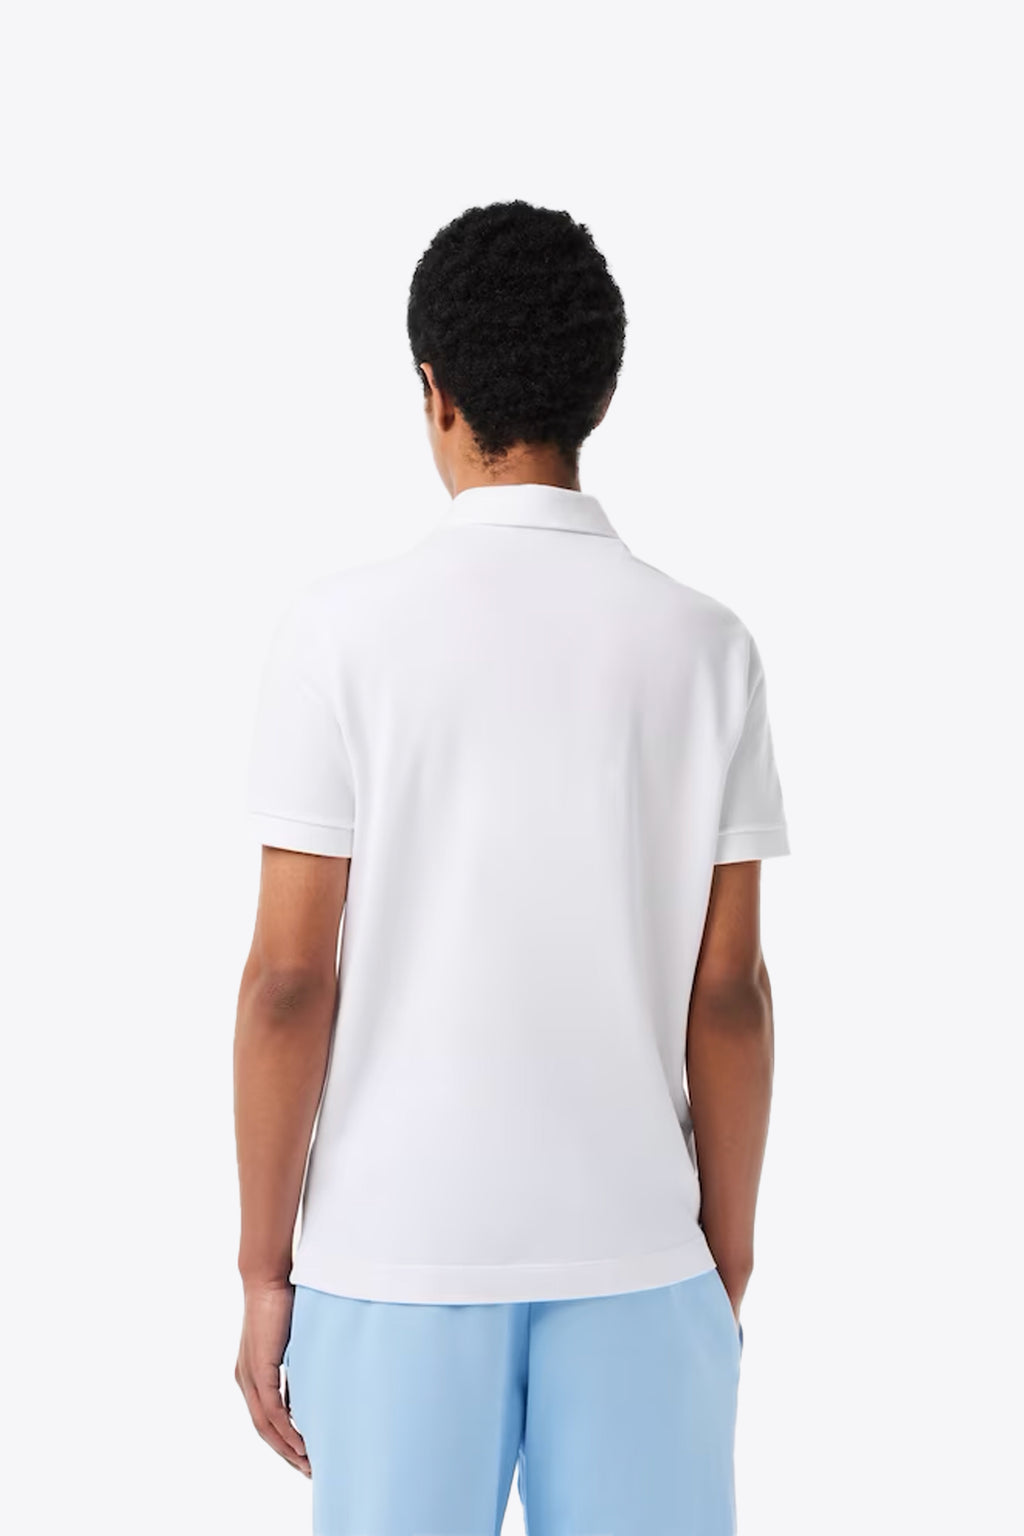 alt-image__White-stretch-piquè-polo-shirt-with-tonal-crocodile-logo